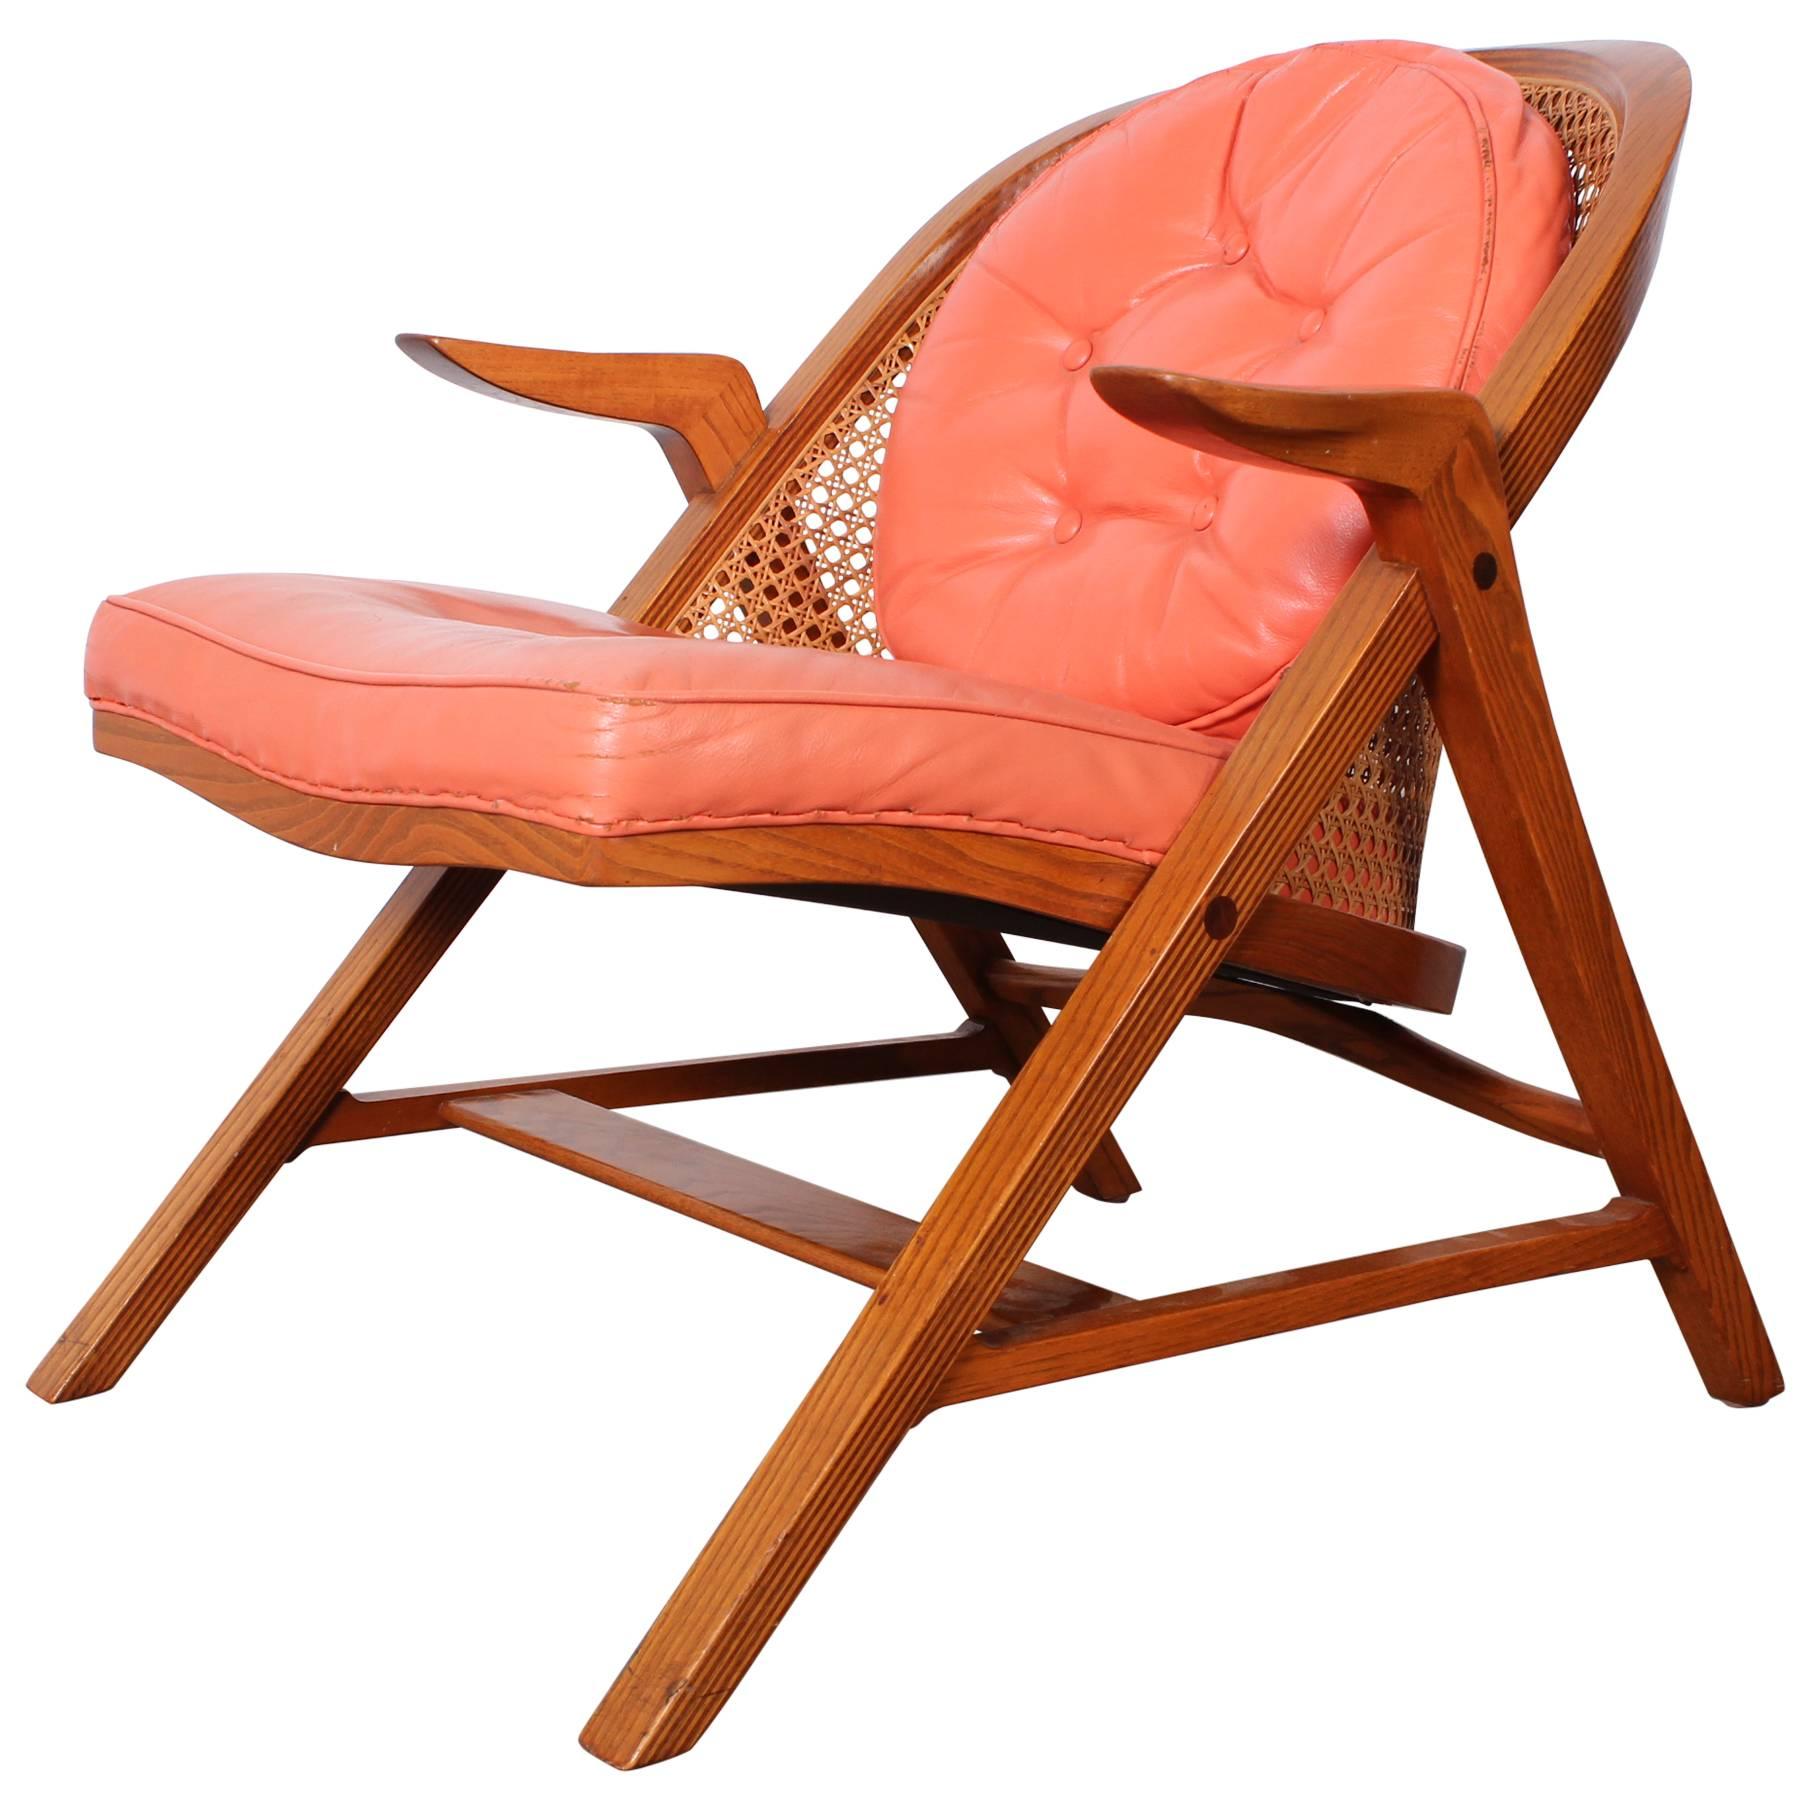 A-Frame Lounge Chair by Edward Wormley for Dunbar